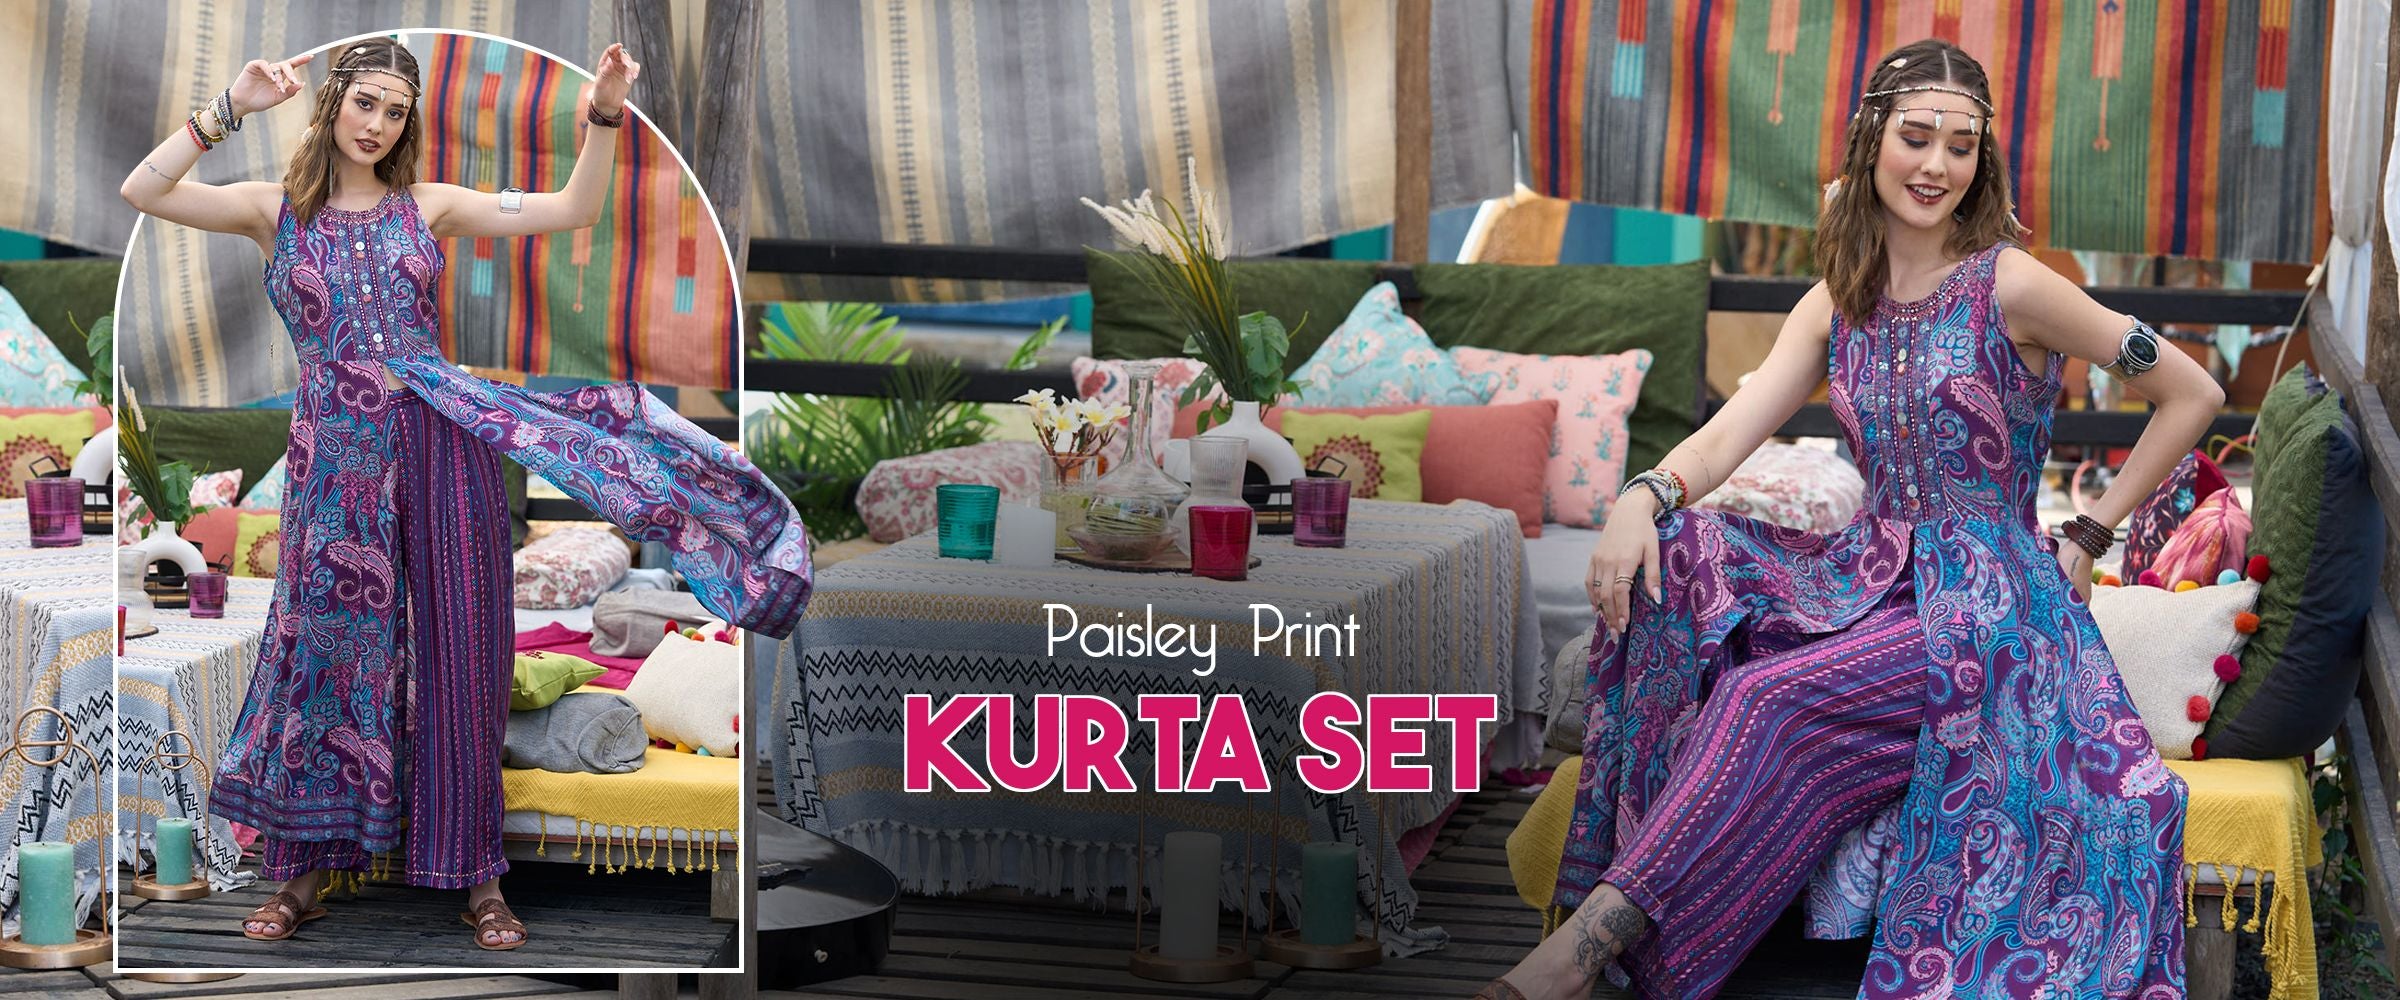 Patiala Suit - Buy Patiala Suit online in India